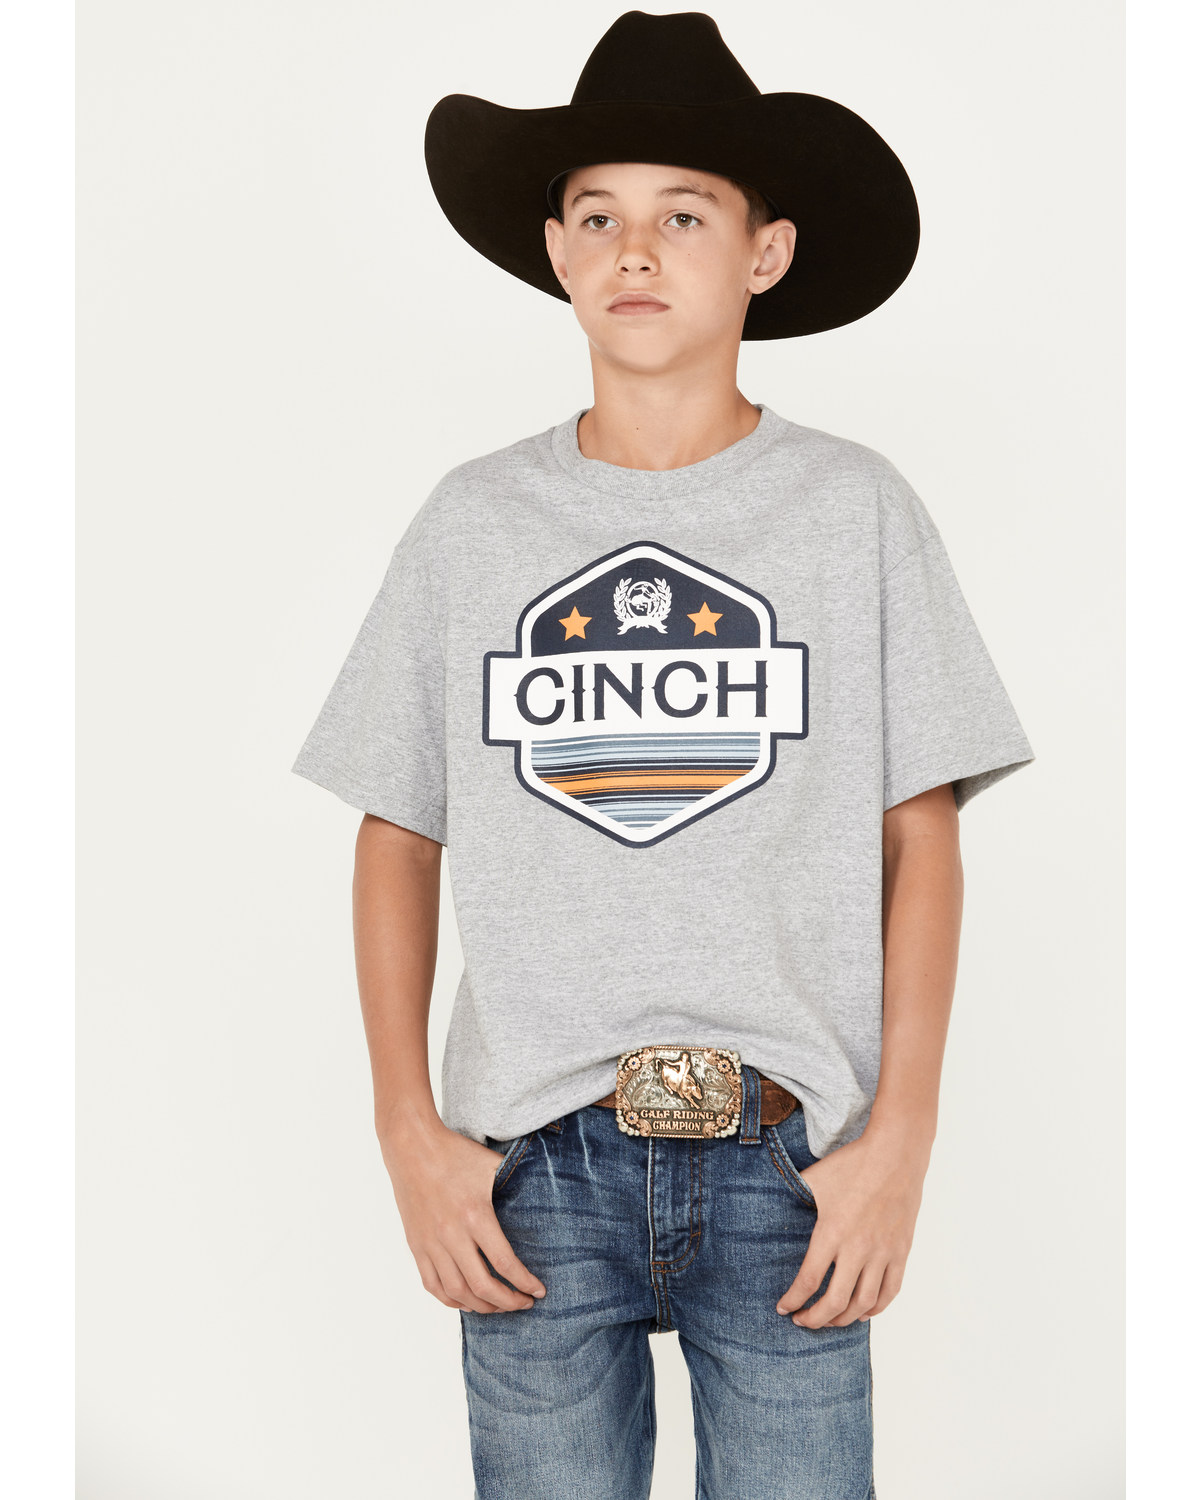 Cinch Boys' Logo Short Sleeve Graphic T-Shirt